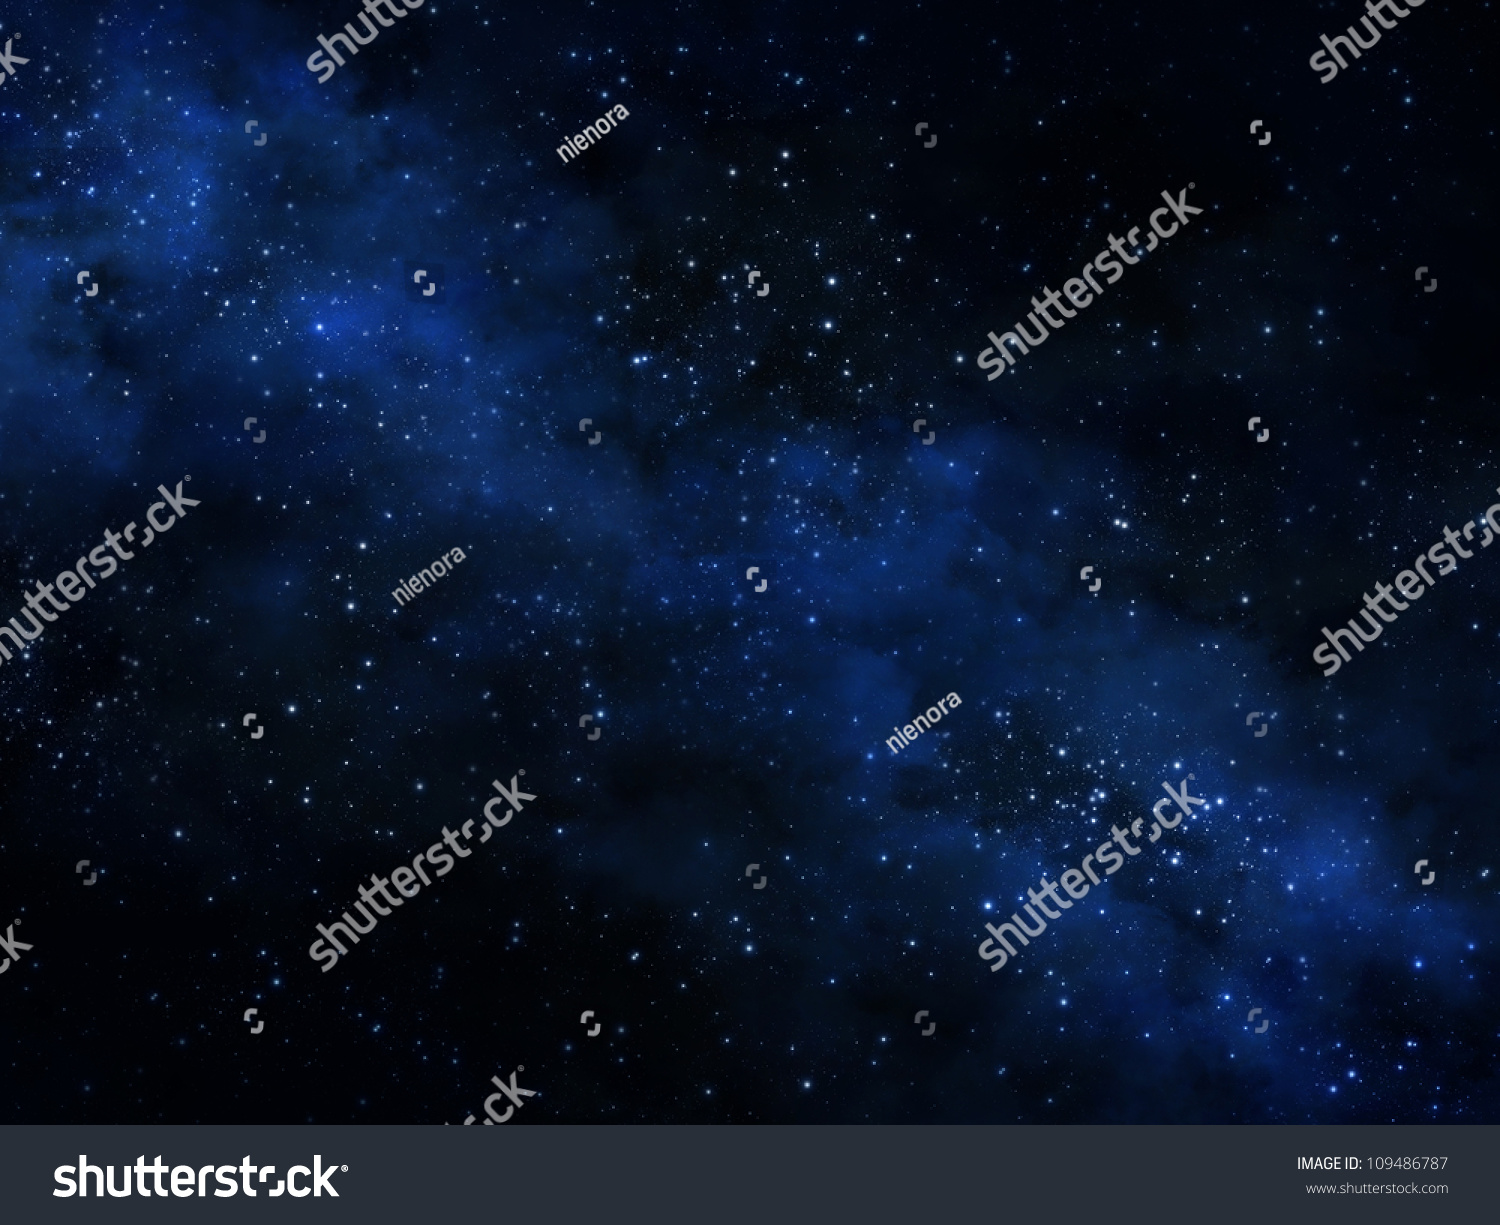 Night Sky With Stars Stock Photo 109486787 : Shutterstock